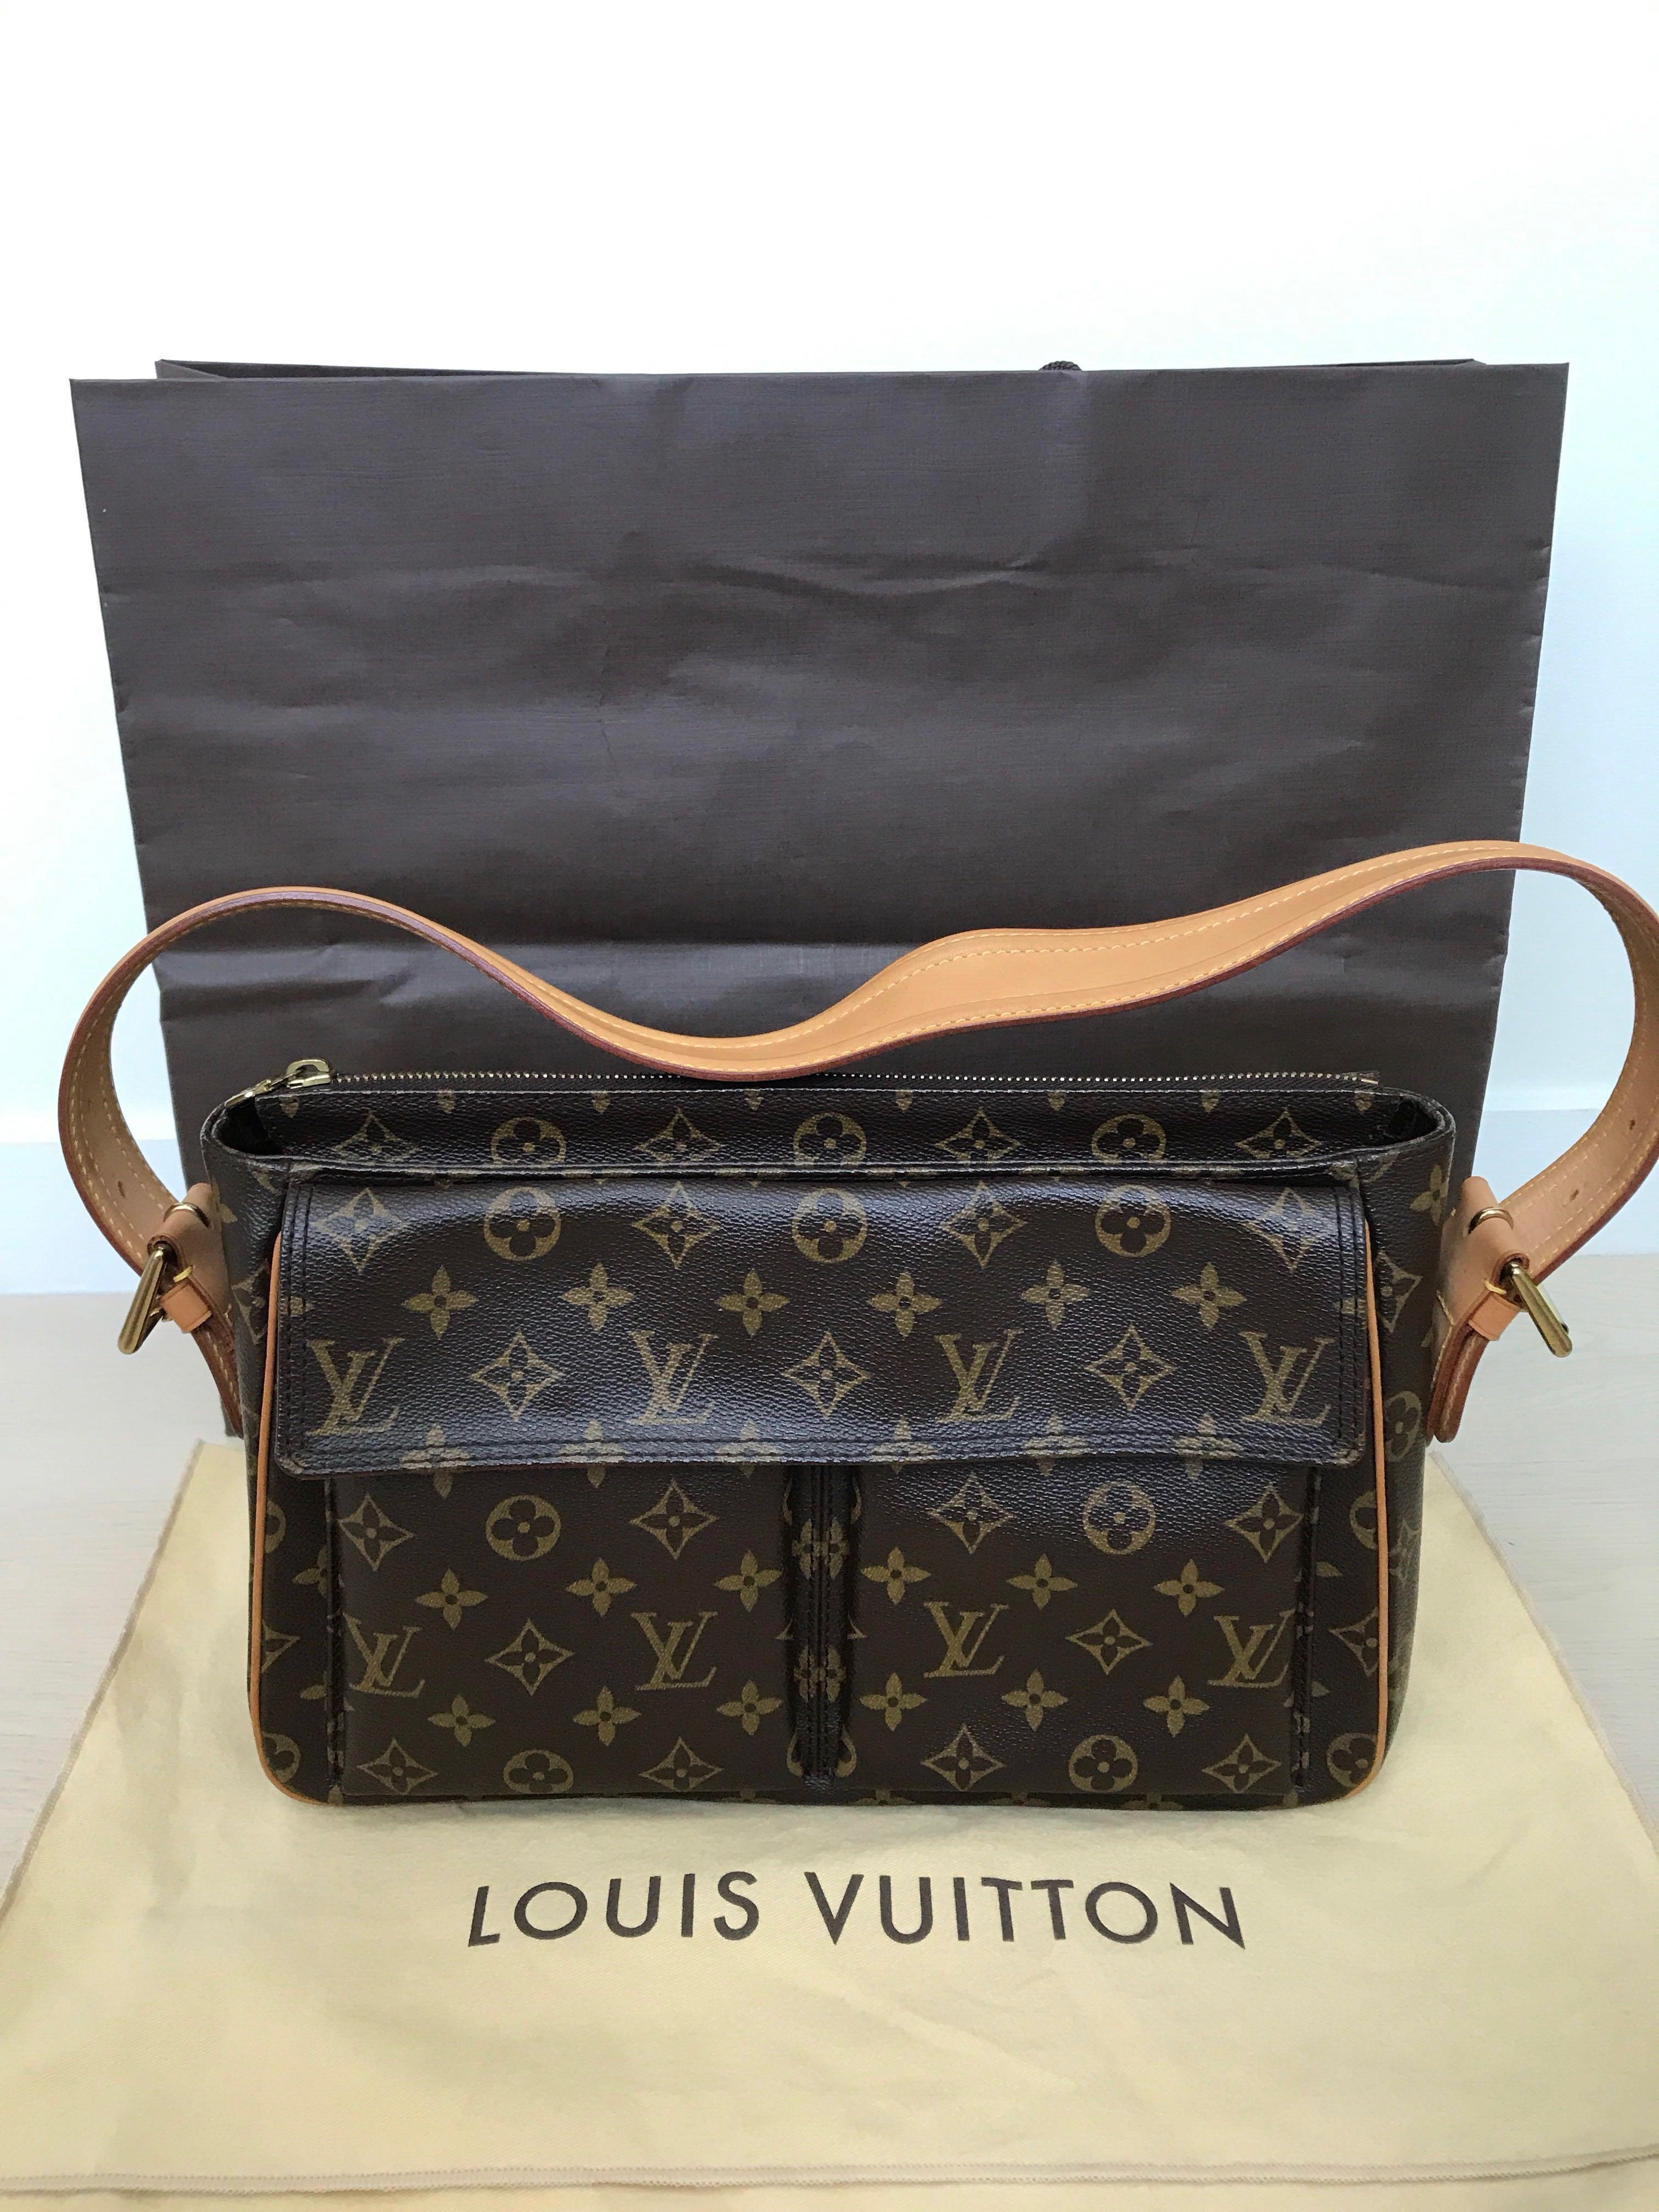 Louis Vuitton Viva-Cite GM Review - Collecting Louis Vuitton